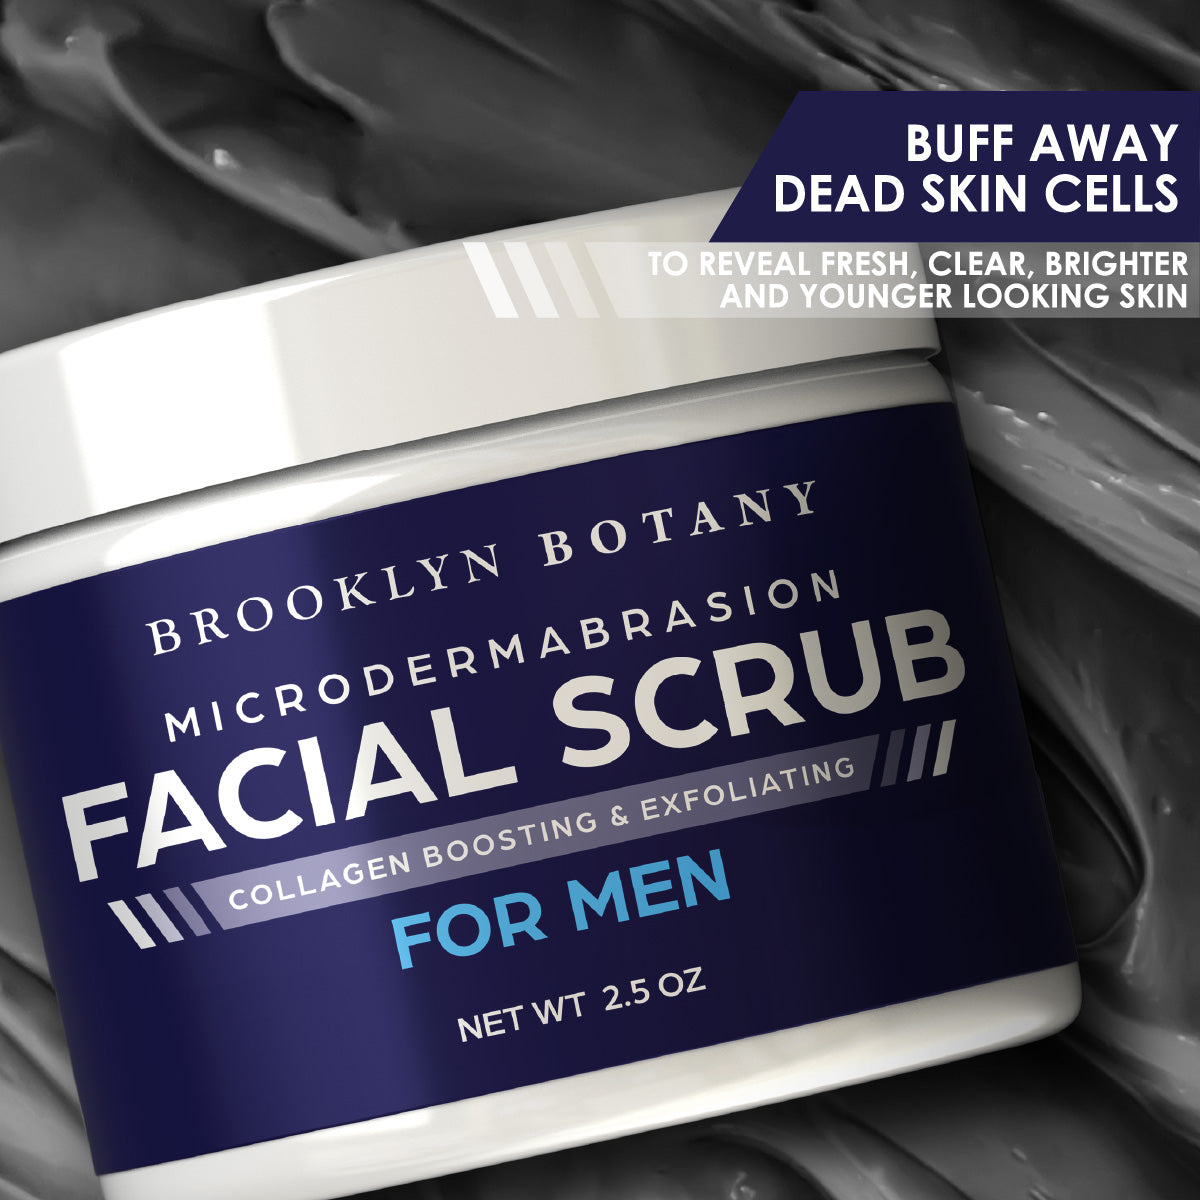 Microdermabrasion Facial Scrub for Men 2.5 oz